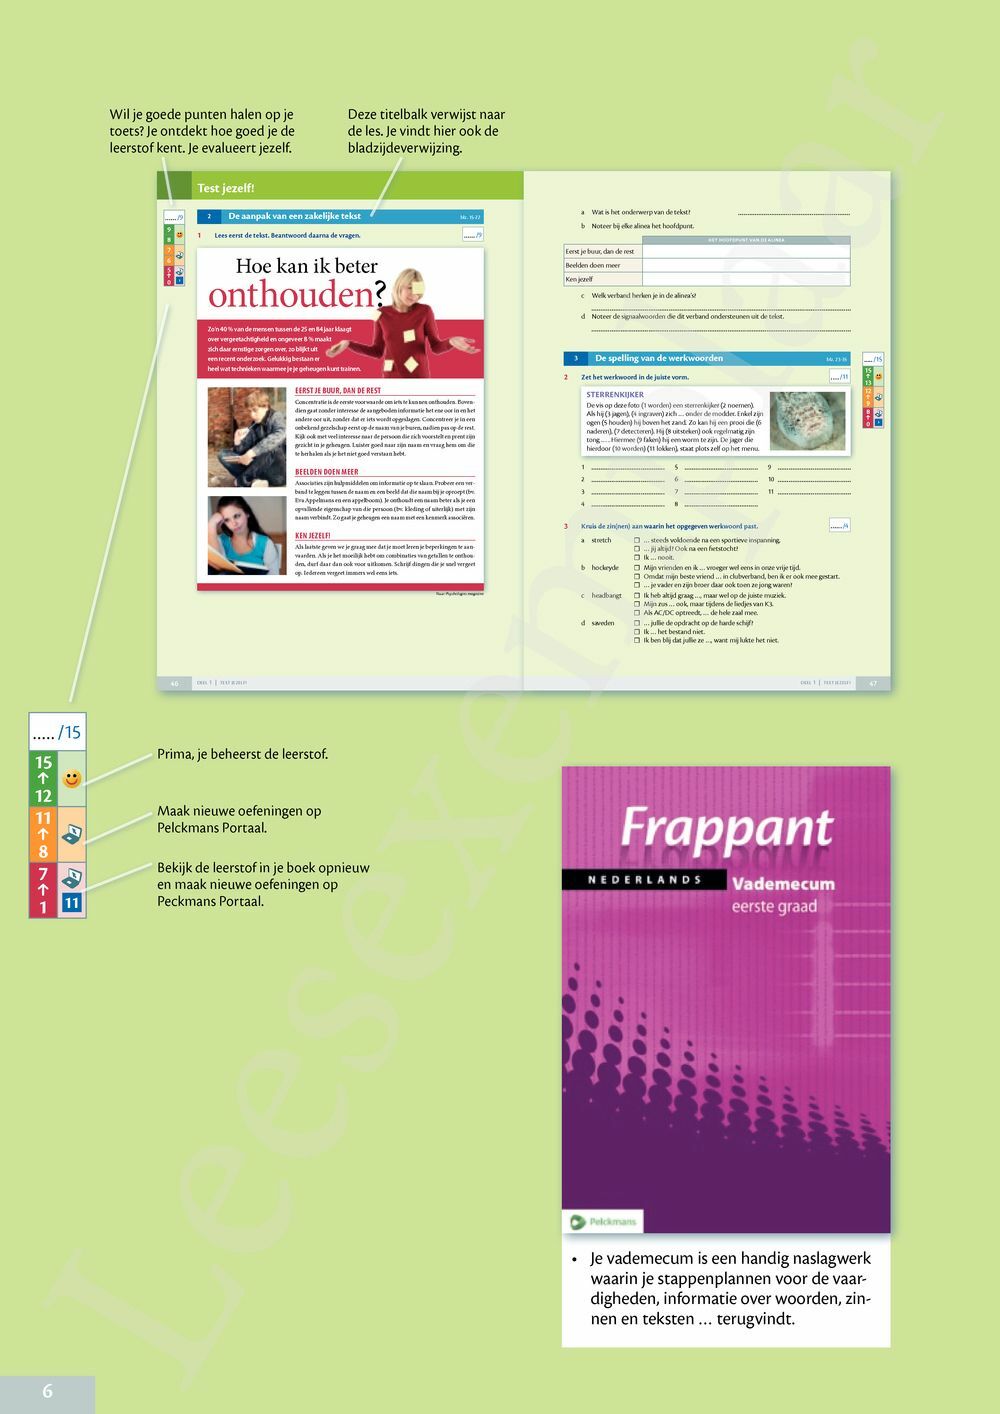 Preview: Frappant Nederlands 2 Leerwerkboek (incl. Pelckmans Portaal)